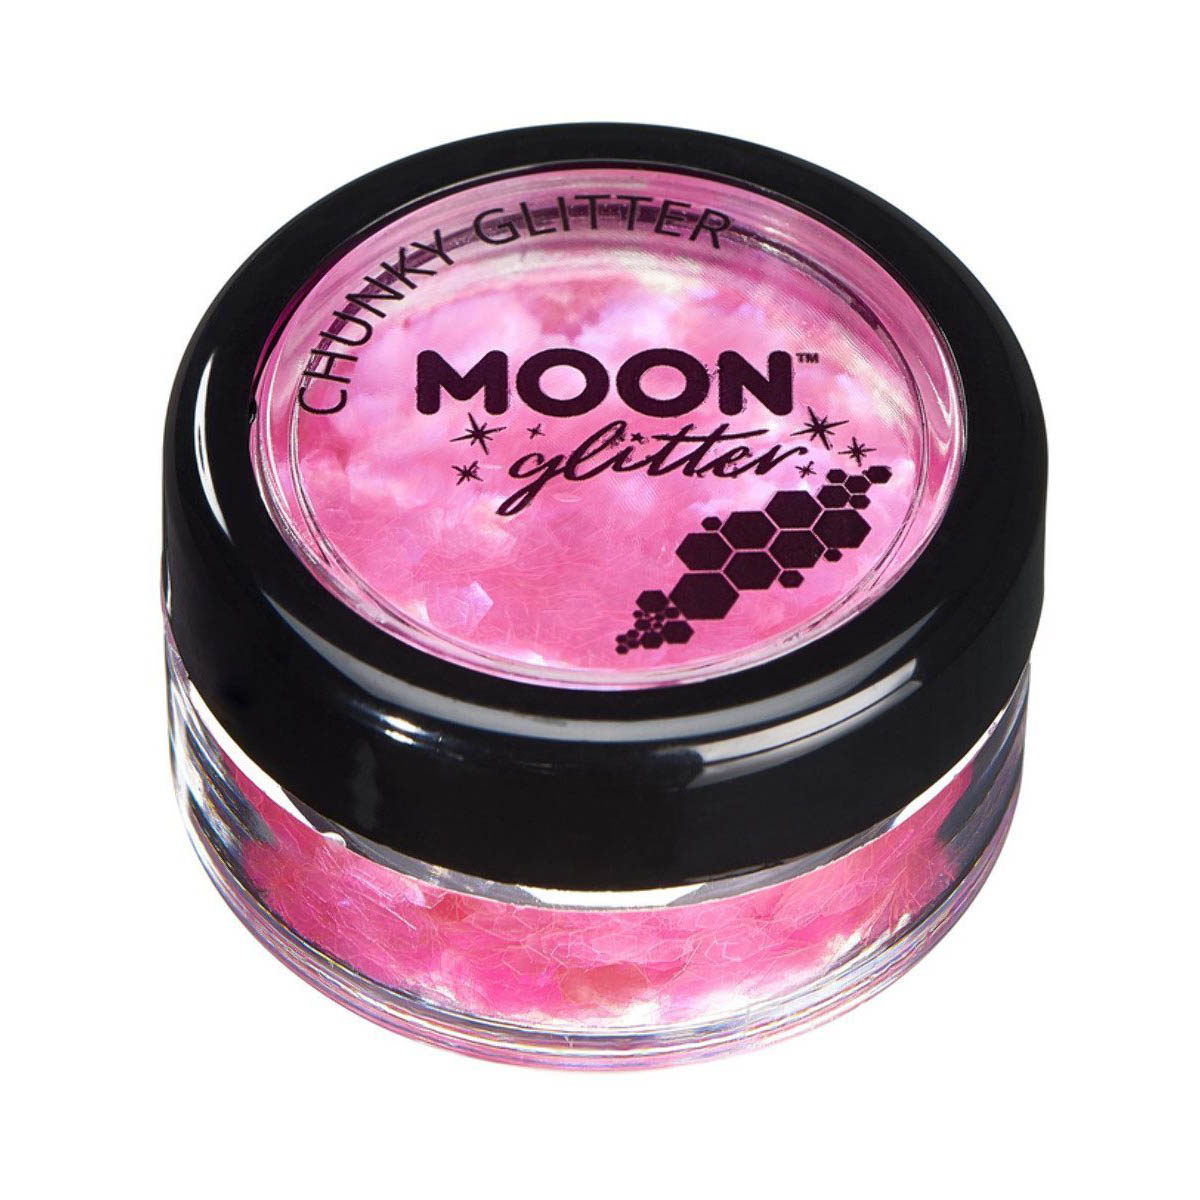 Moon kroppsglitter iriserande chunky 5g Rosa